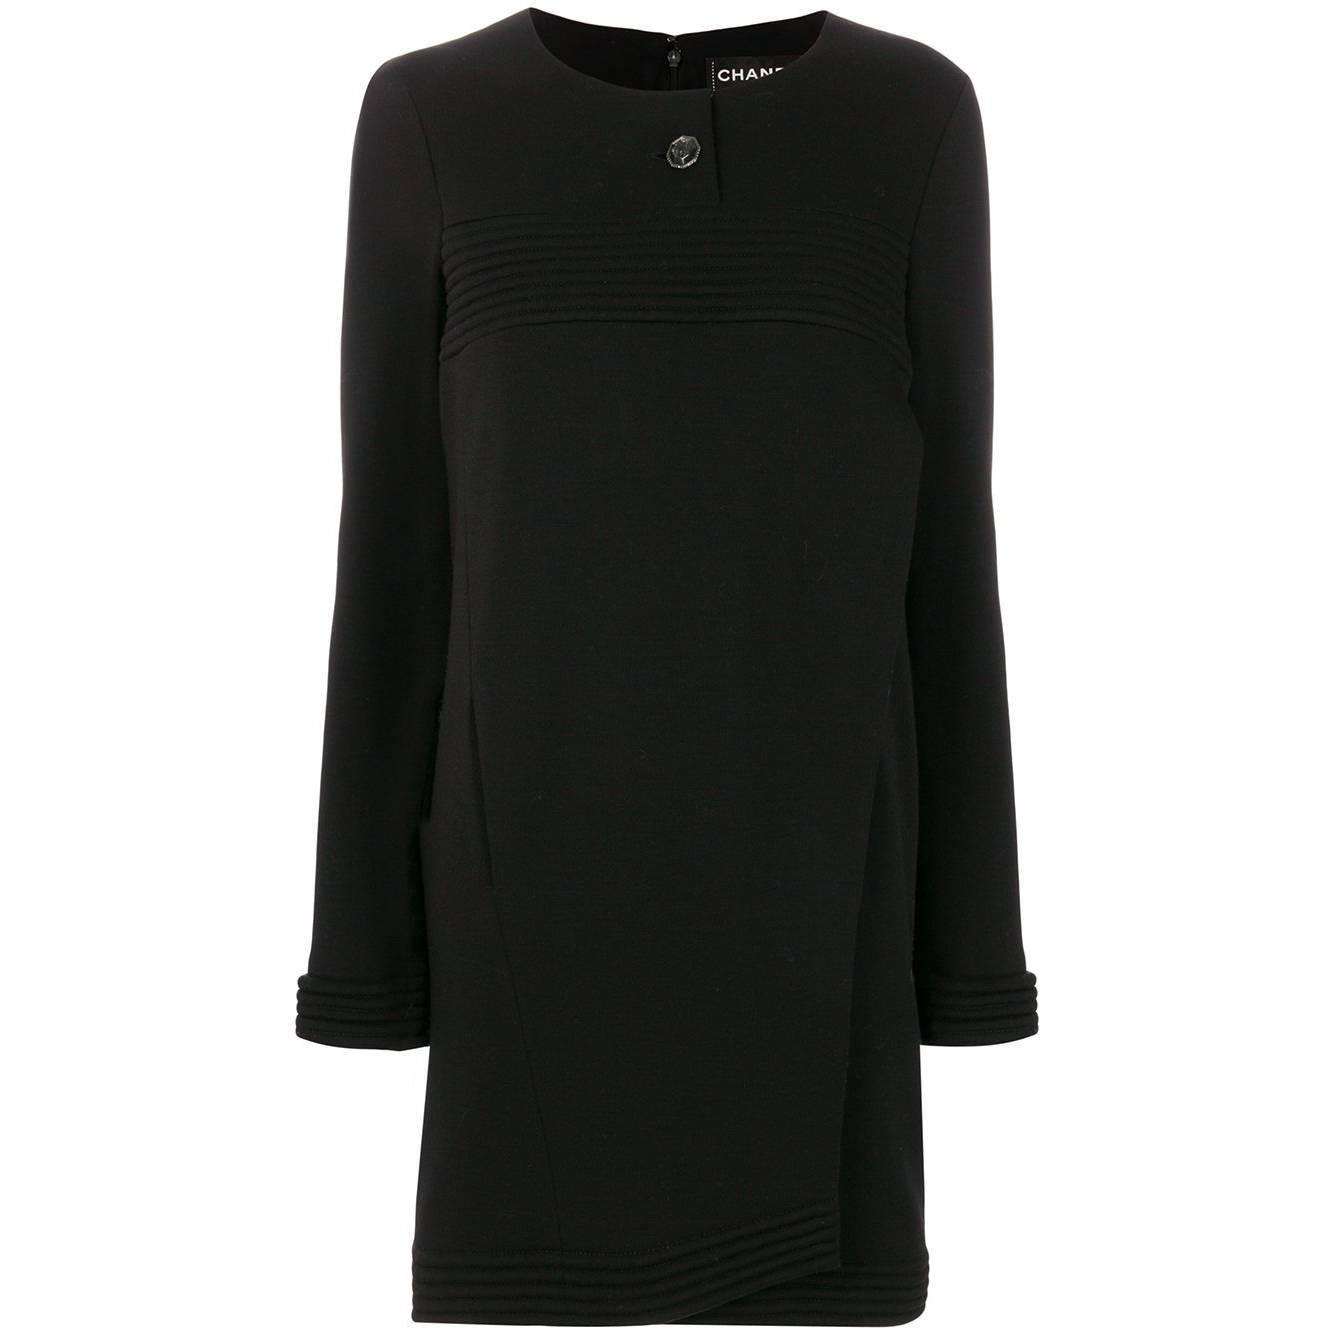 Chanel Long Sleeve Black Dress